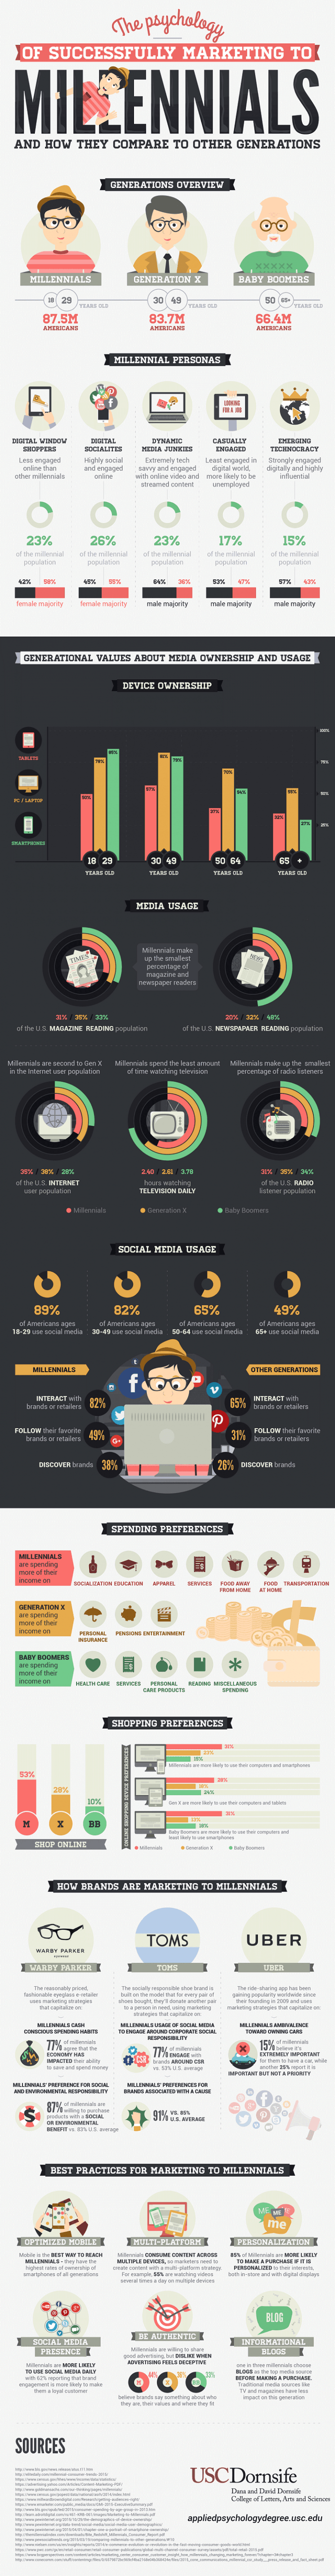 infographic describes marketing strategies for millennials